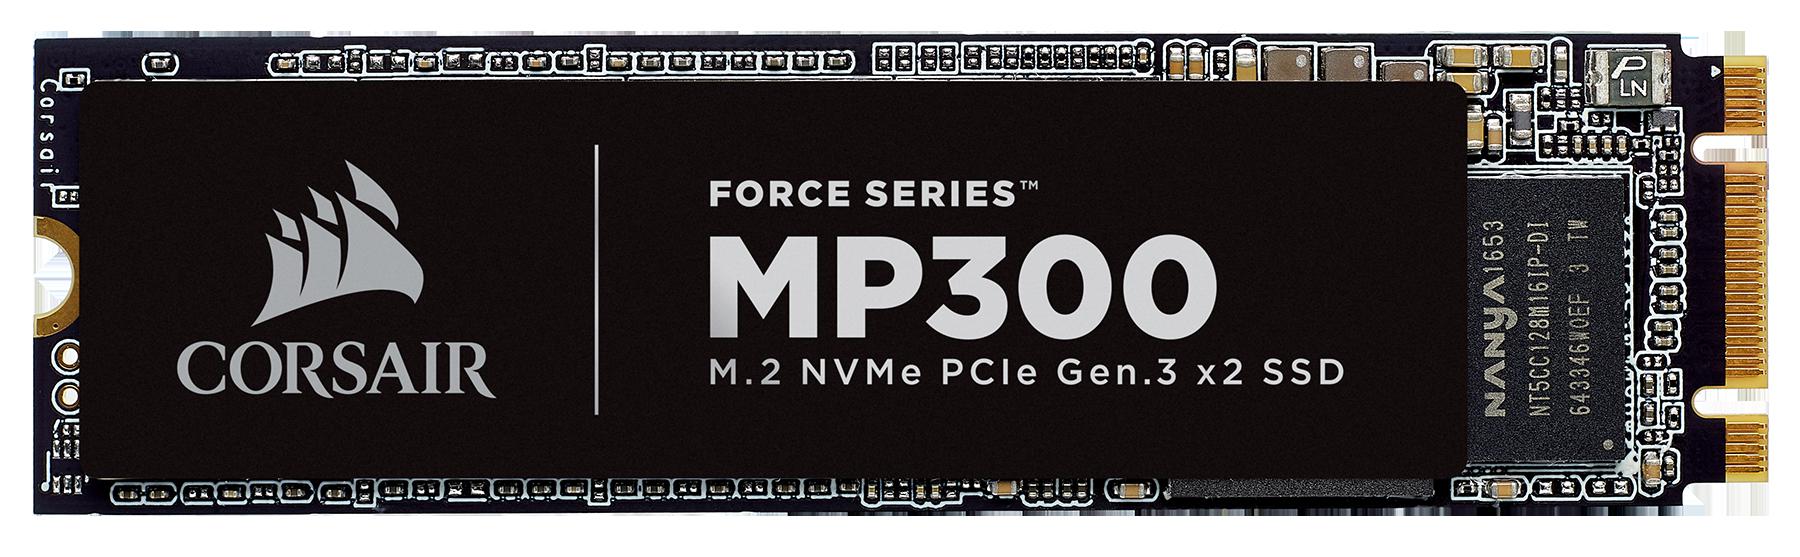 SSD Corsair Force MP300, 120GB, NVMe PCIe, M.2